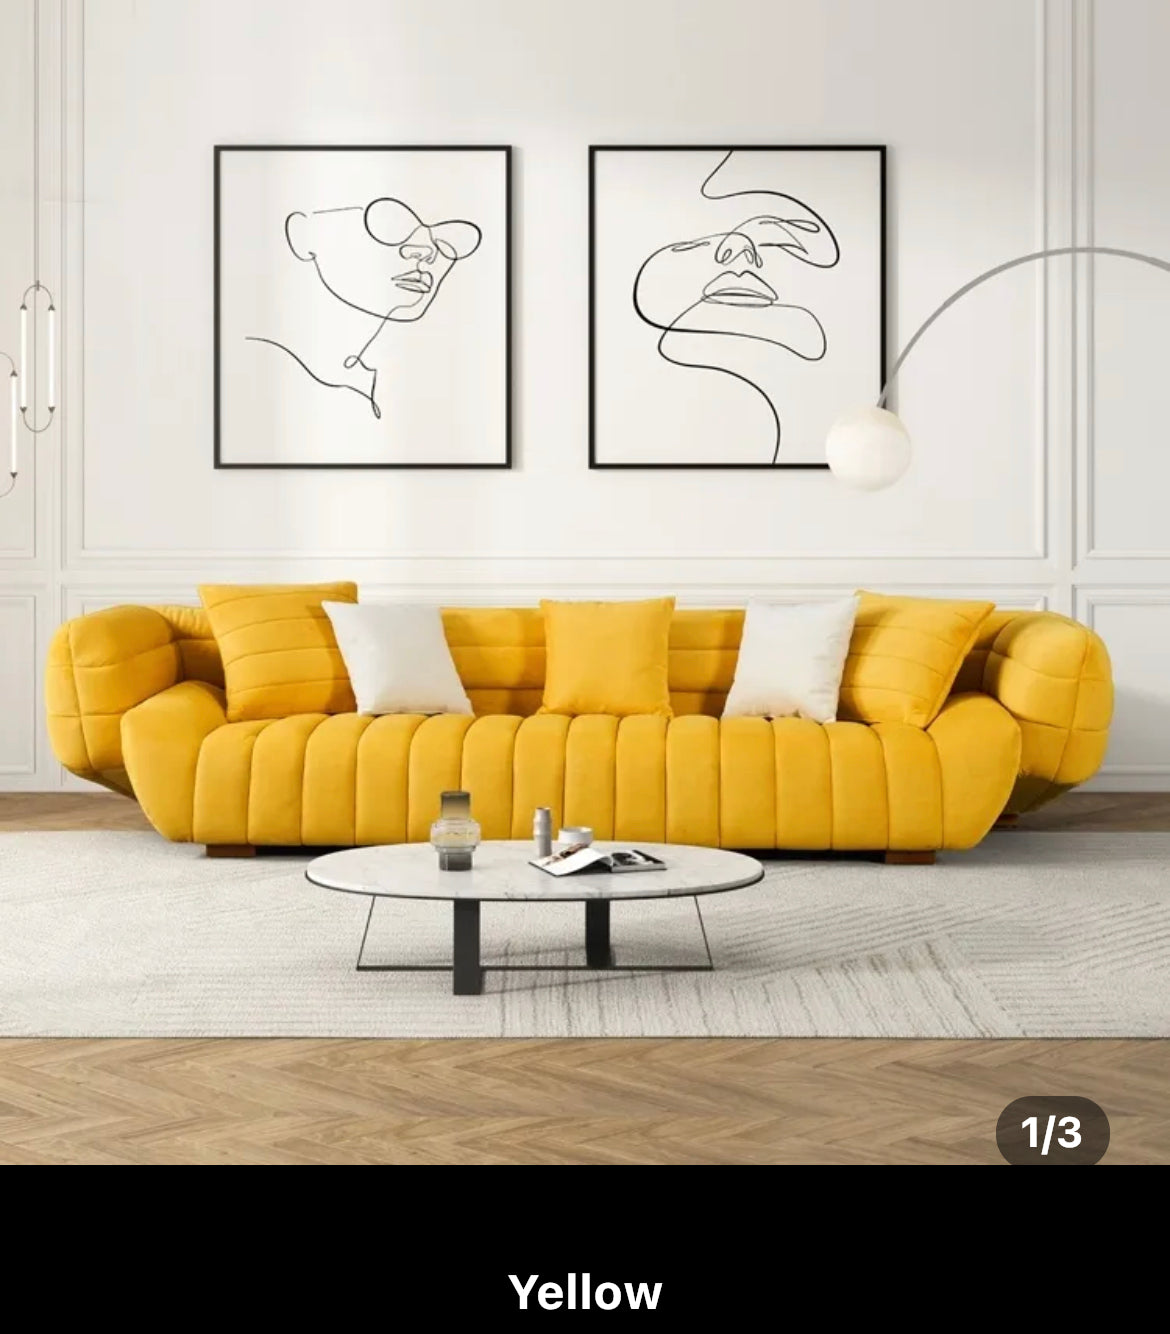 Living Room Sofas New Nordic Latest Italian Design Banana Leisure Sofa